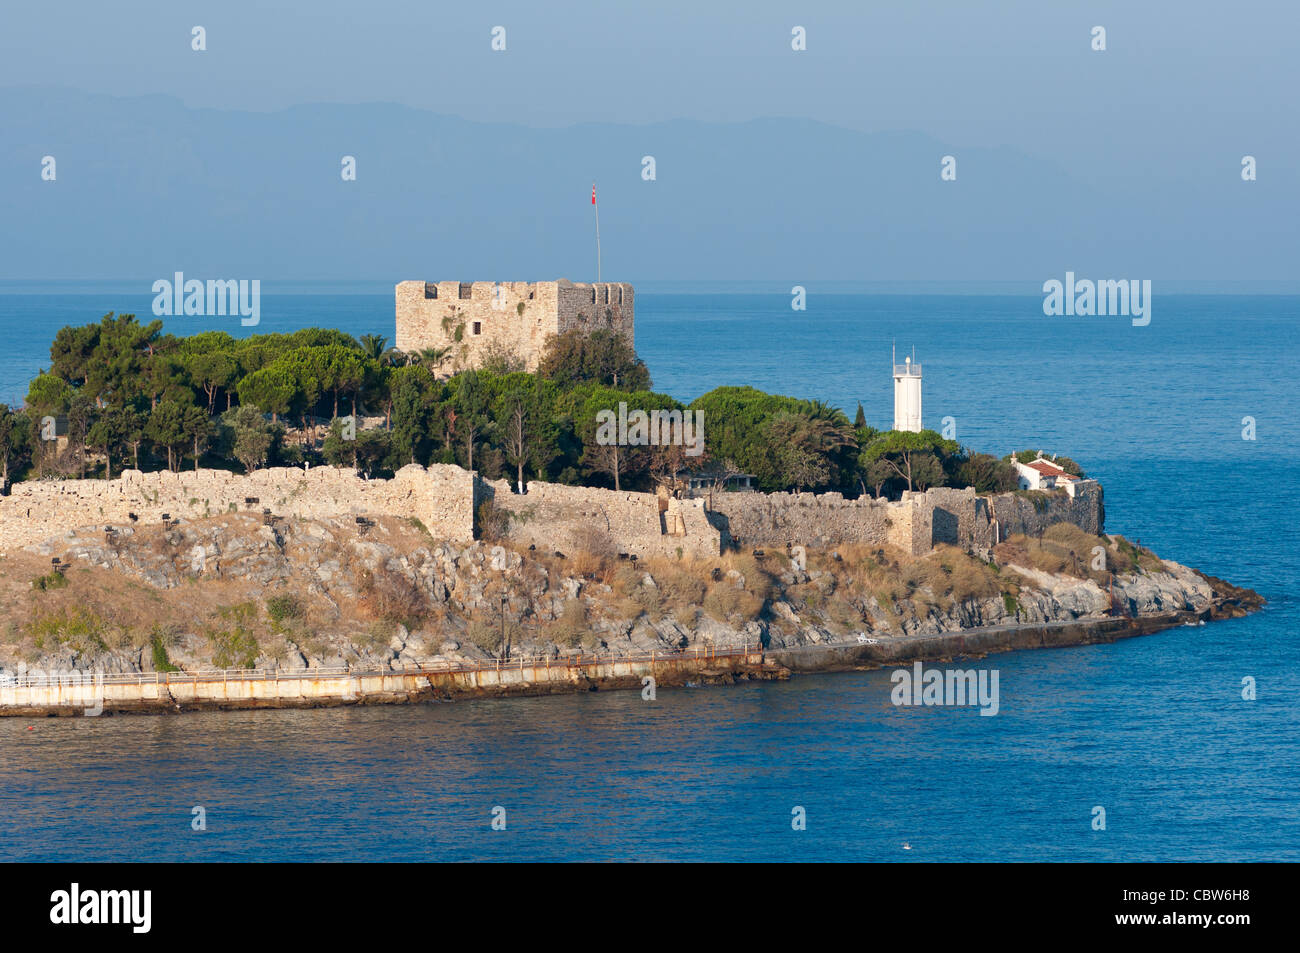 Turkey, Kusadasi. Tiny island of Guvercin Adasi (aka Dove Island) in the Aegean Sea, 14th-15th century fortress. Stock Photo